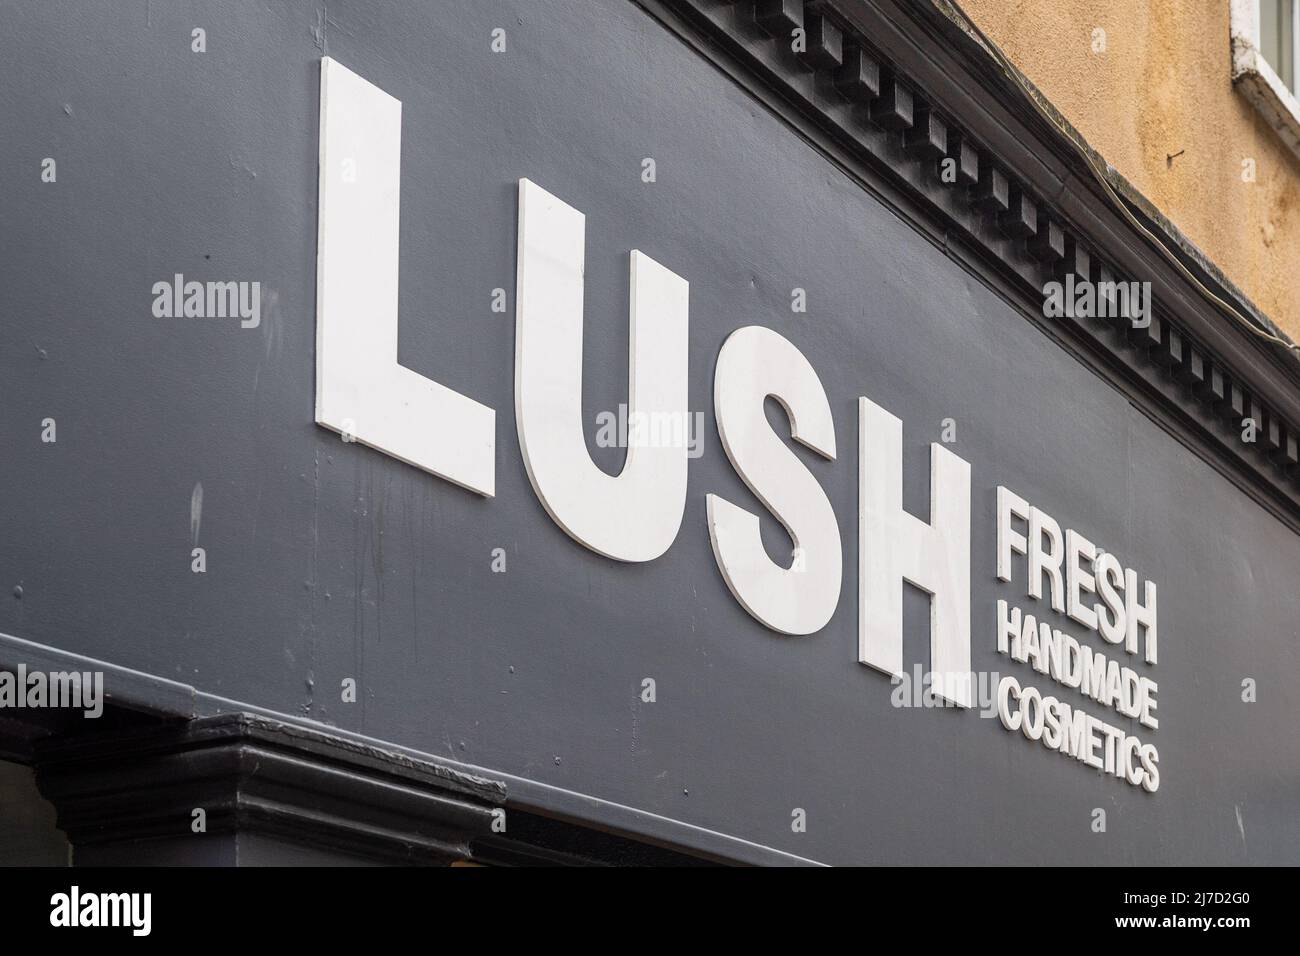 Lush handmade cosmetics shop exterior in Cork, Ireland. Stock Photo